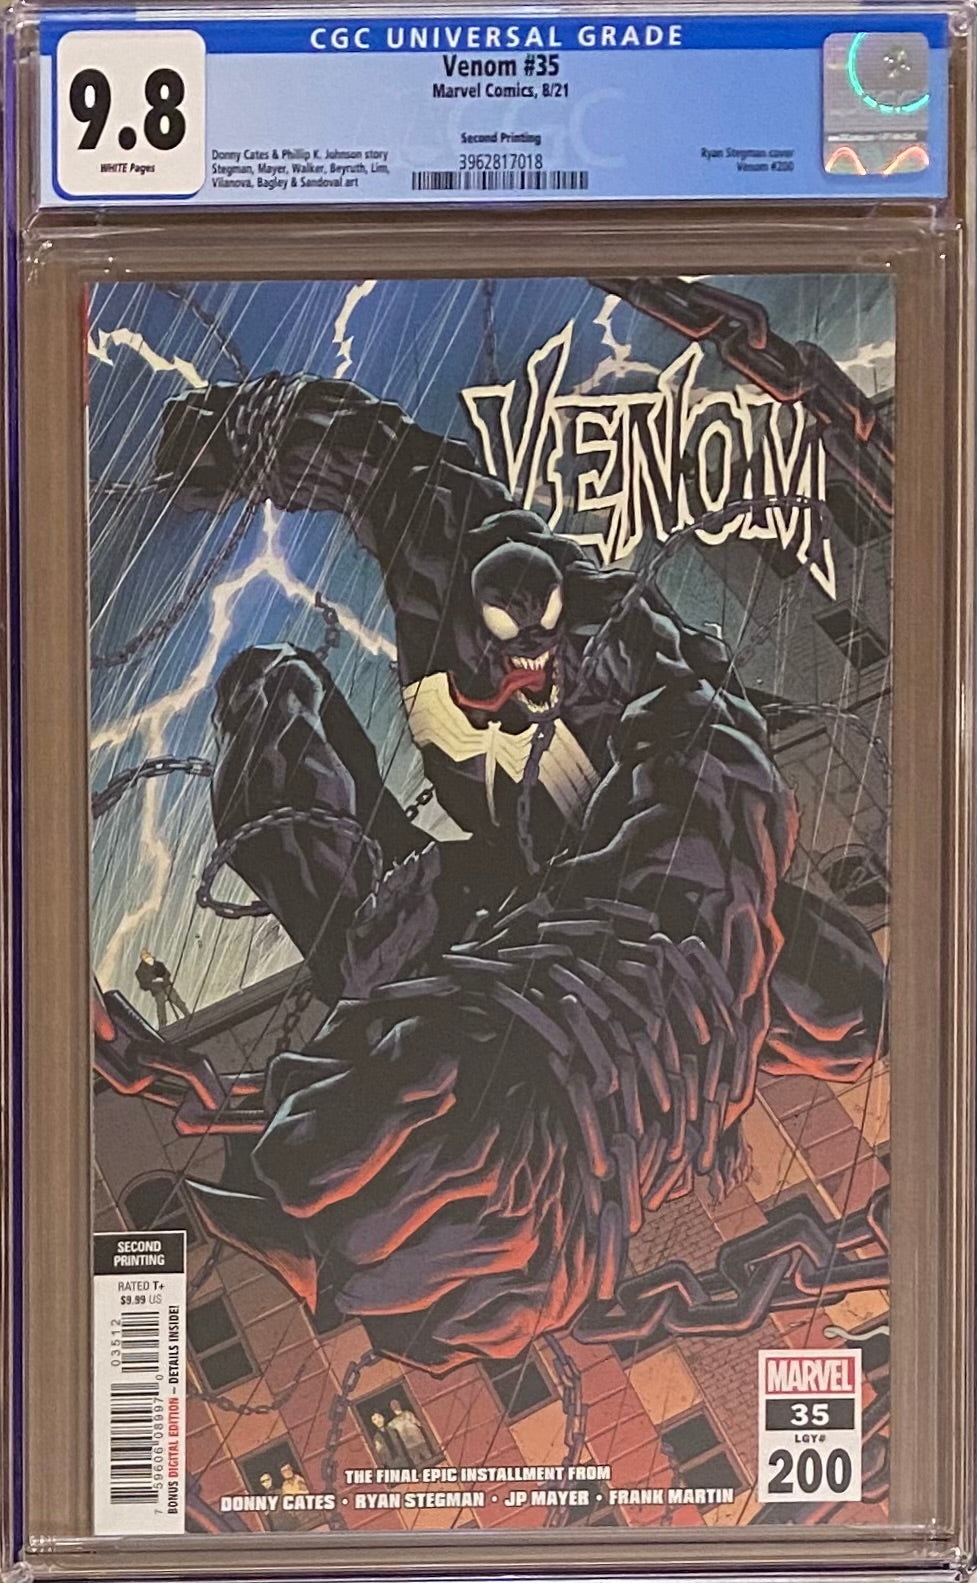 Venom #35 (#200) Second Printing CGC 9.8